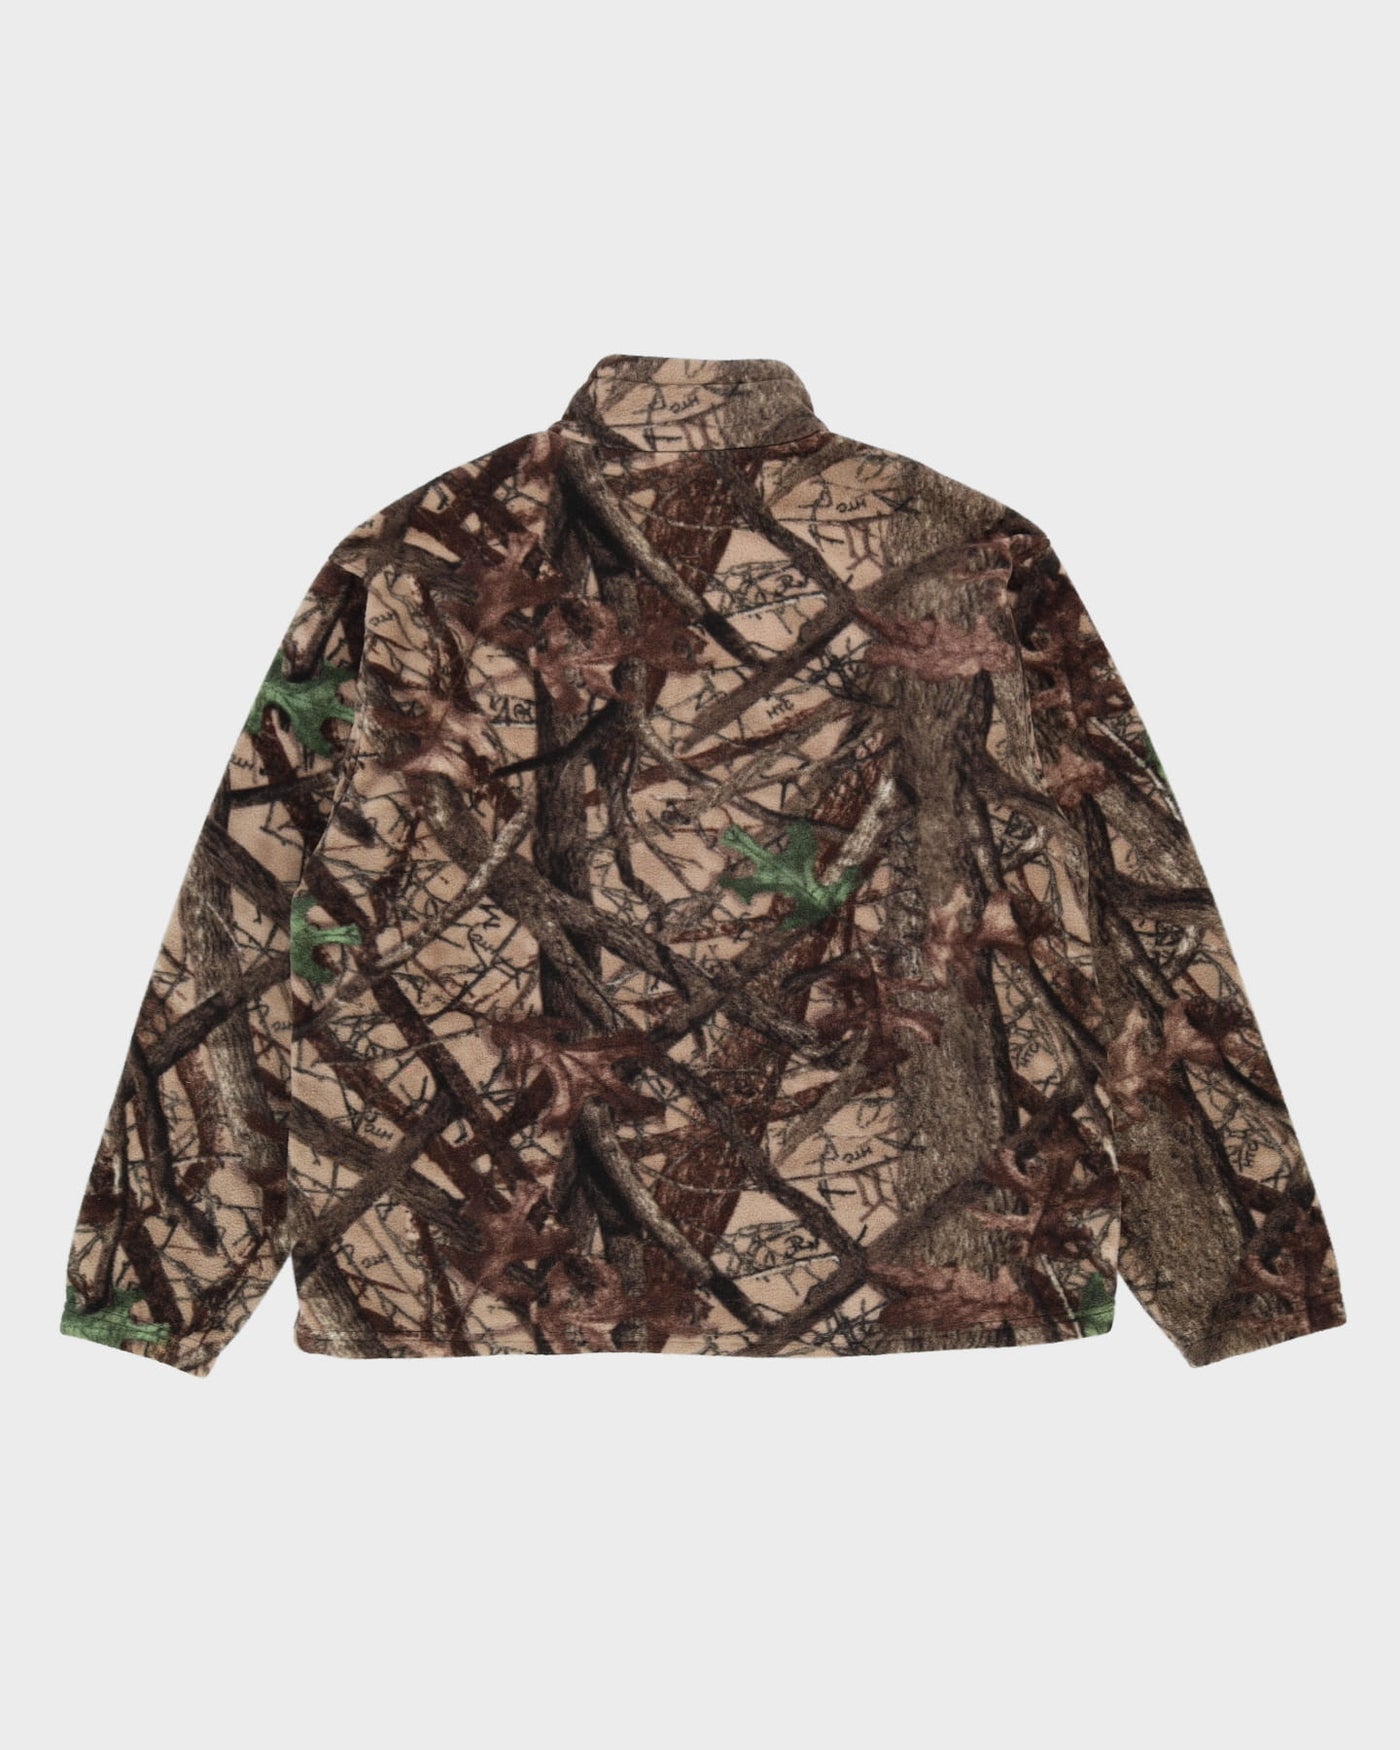 Woodland Camo Patterned Full-Zip Fleece - XL